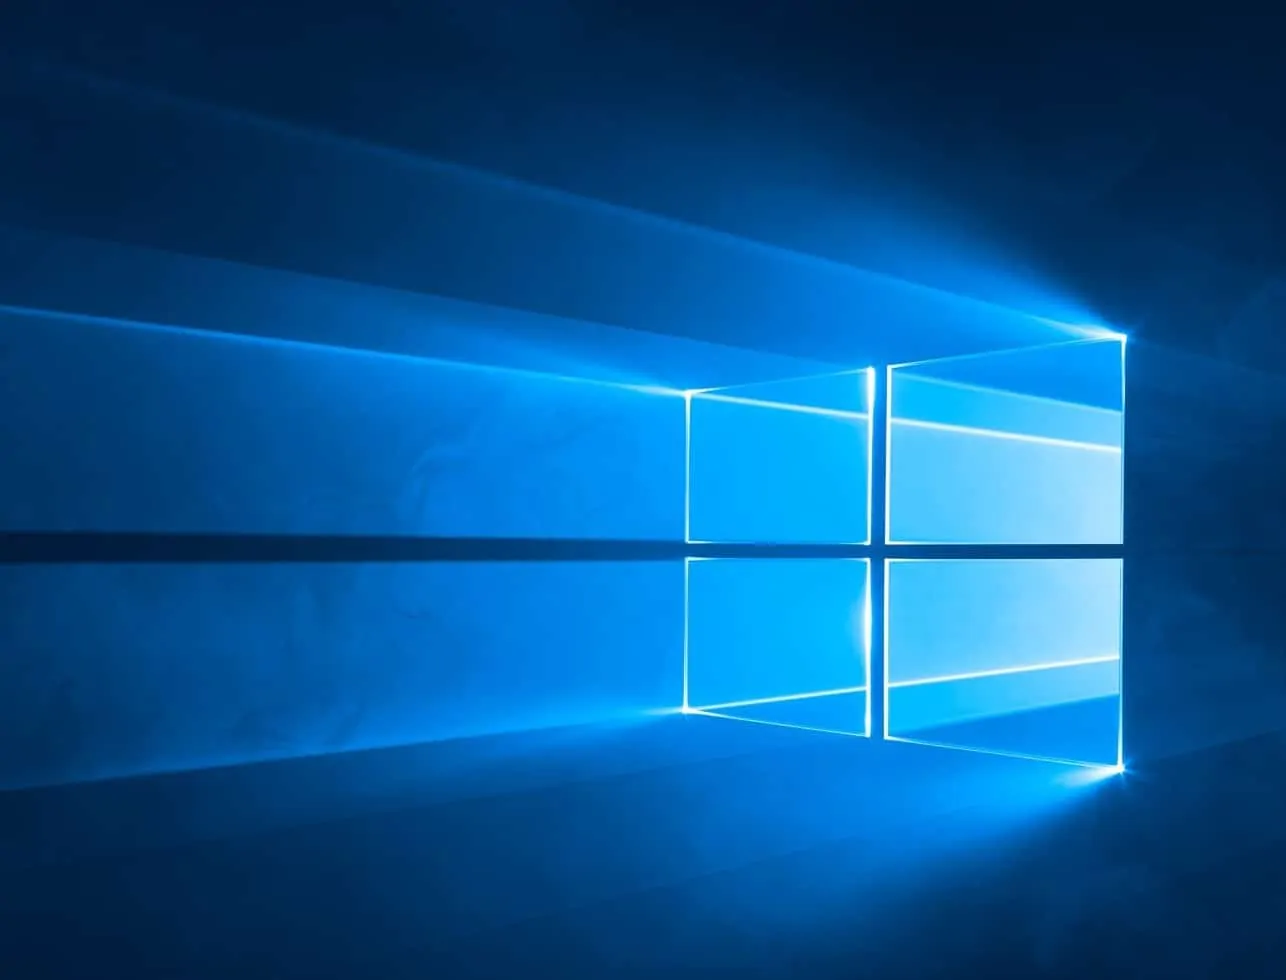 Latest Windows 10 Update